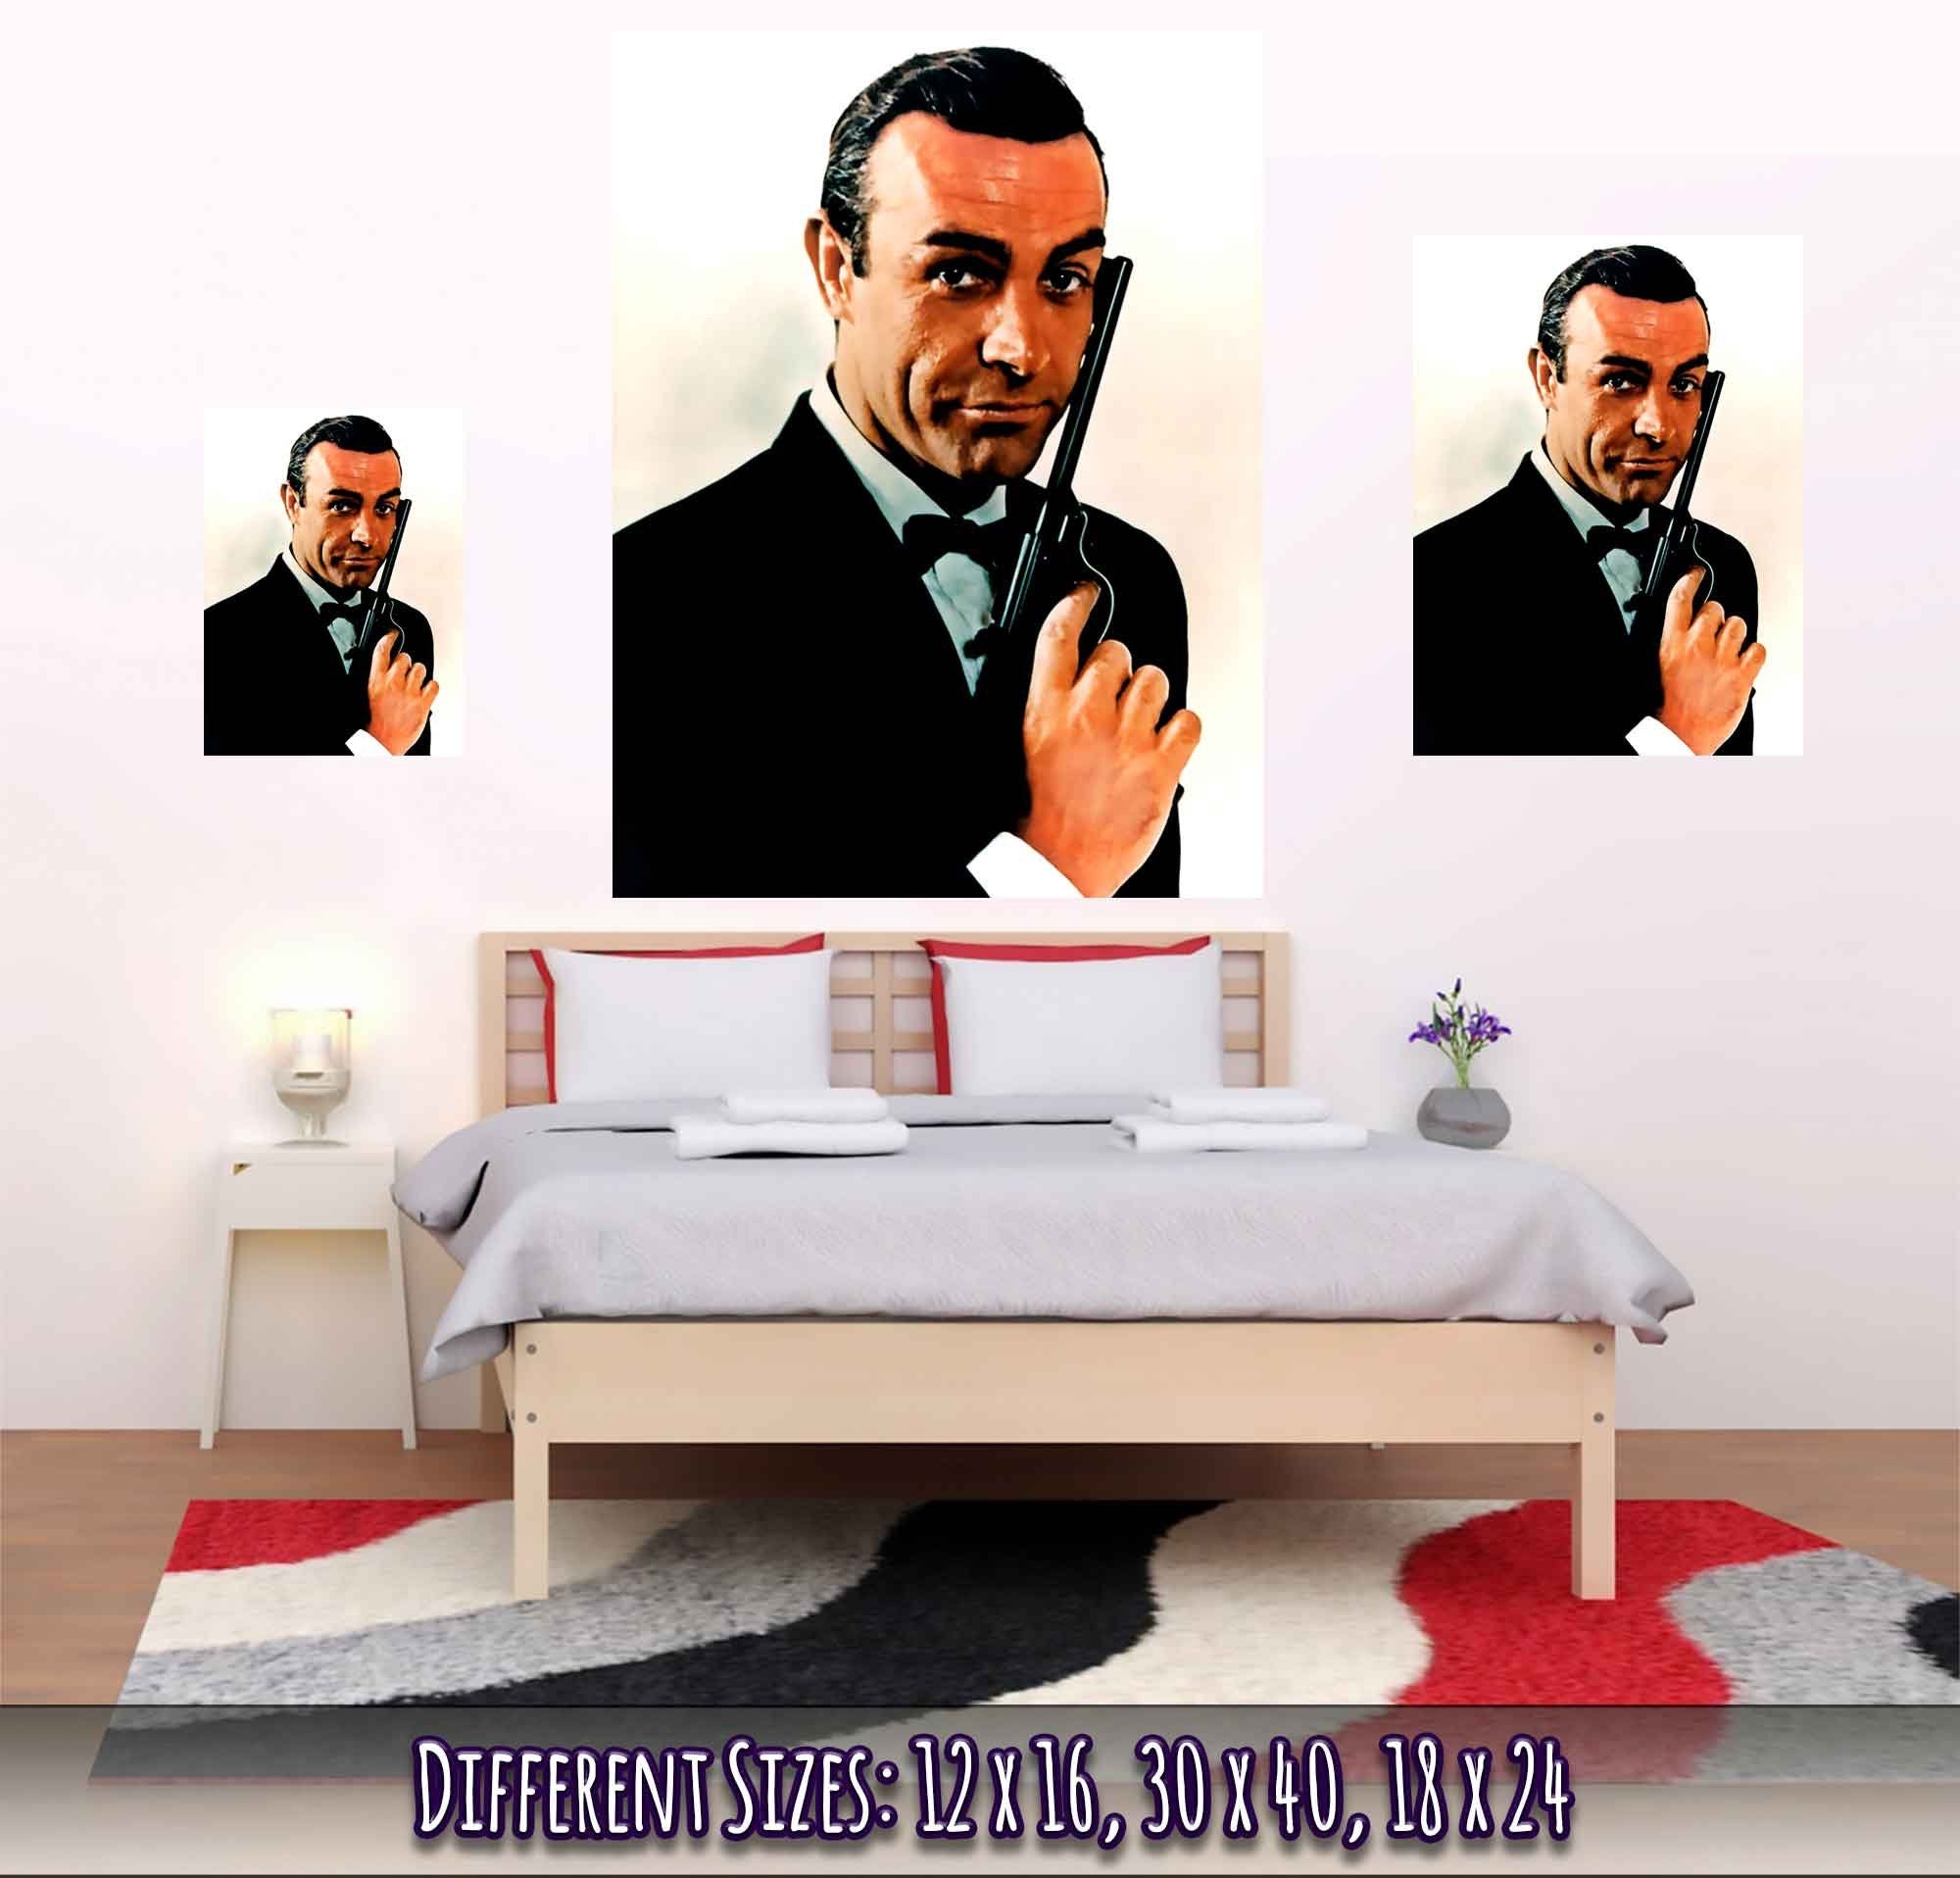 James Bond Poster, Sean Connery Handsome Actor, Vintage Photo - James Bond Print - WallArtPrints4U